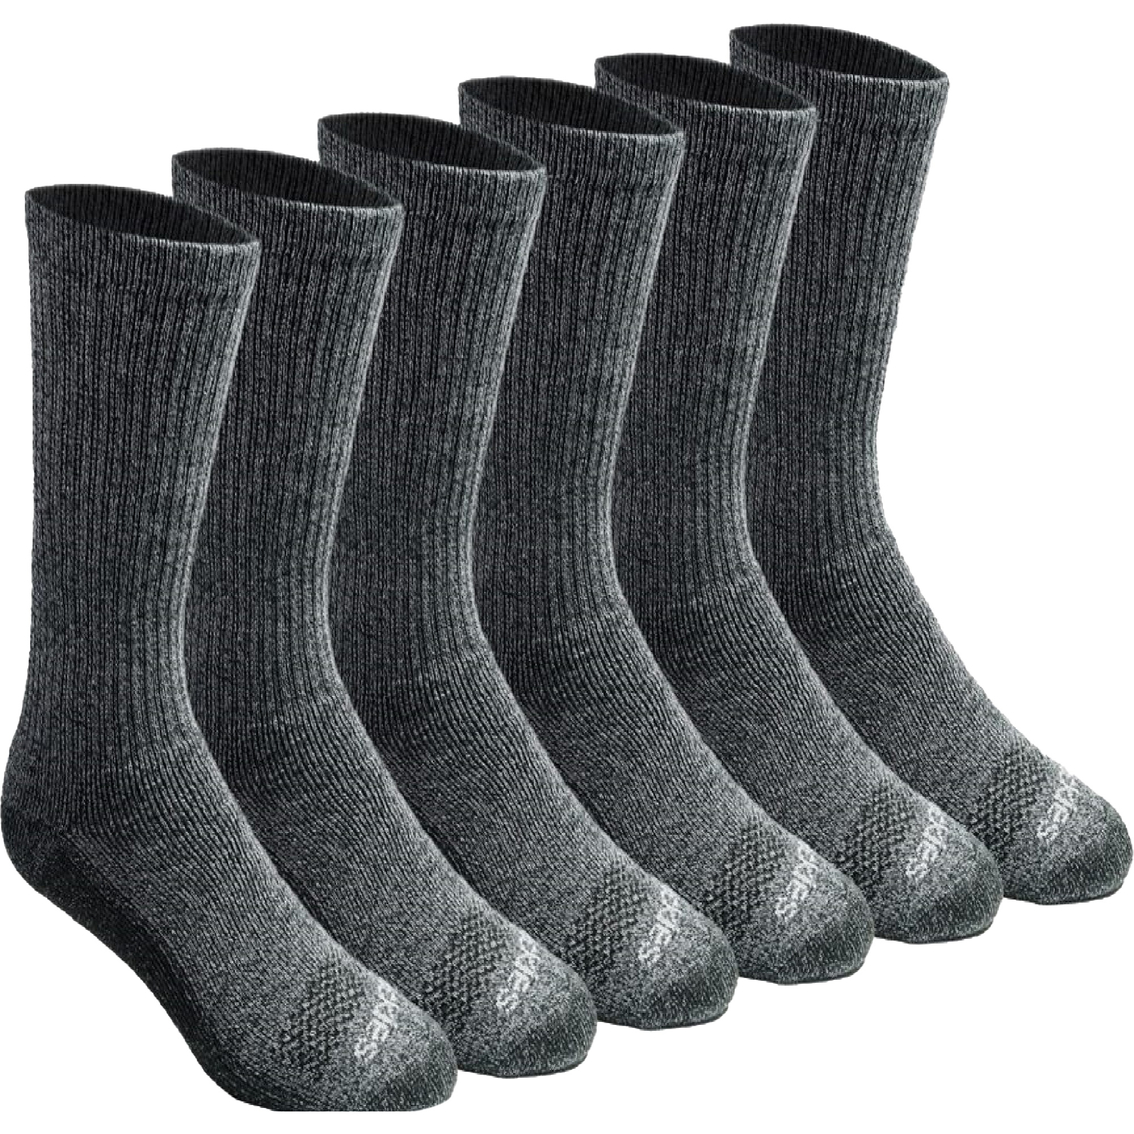 Dickies Dri Tech Crew Socks 6 Pk. | Socks | Clothing & Accessories ...